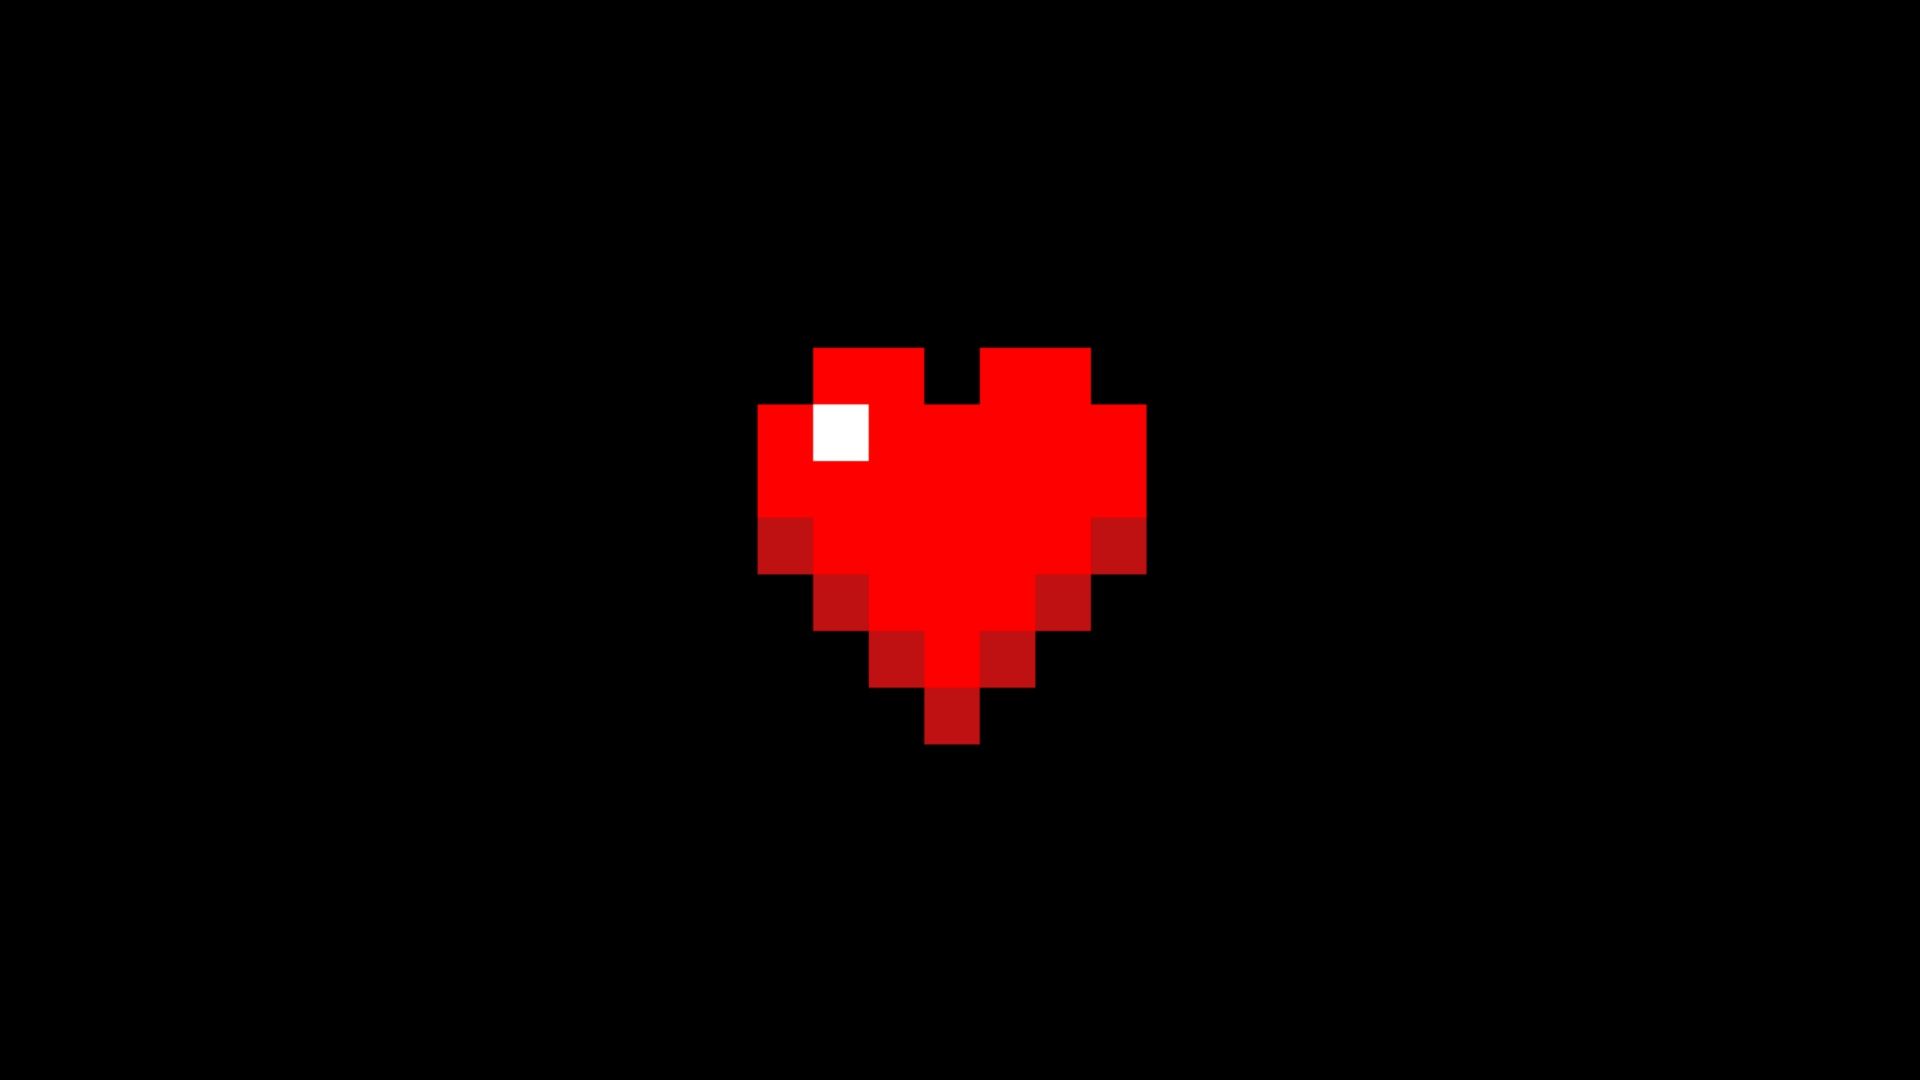 A pixel heart on black background - Pixel art